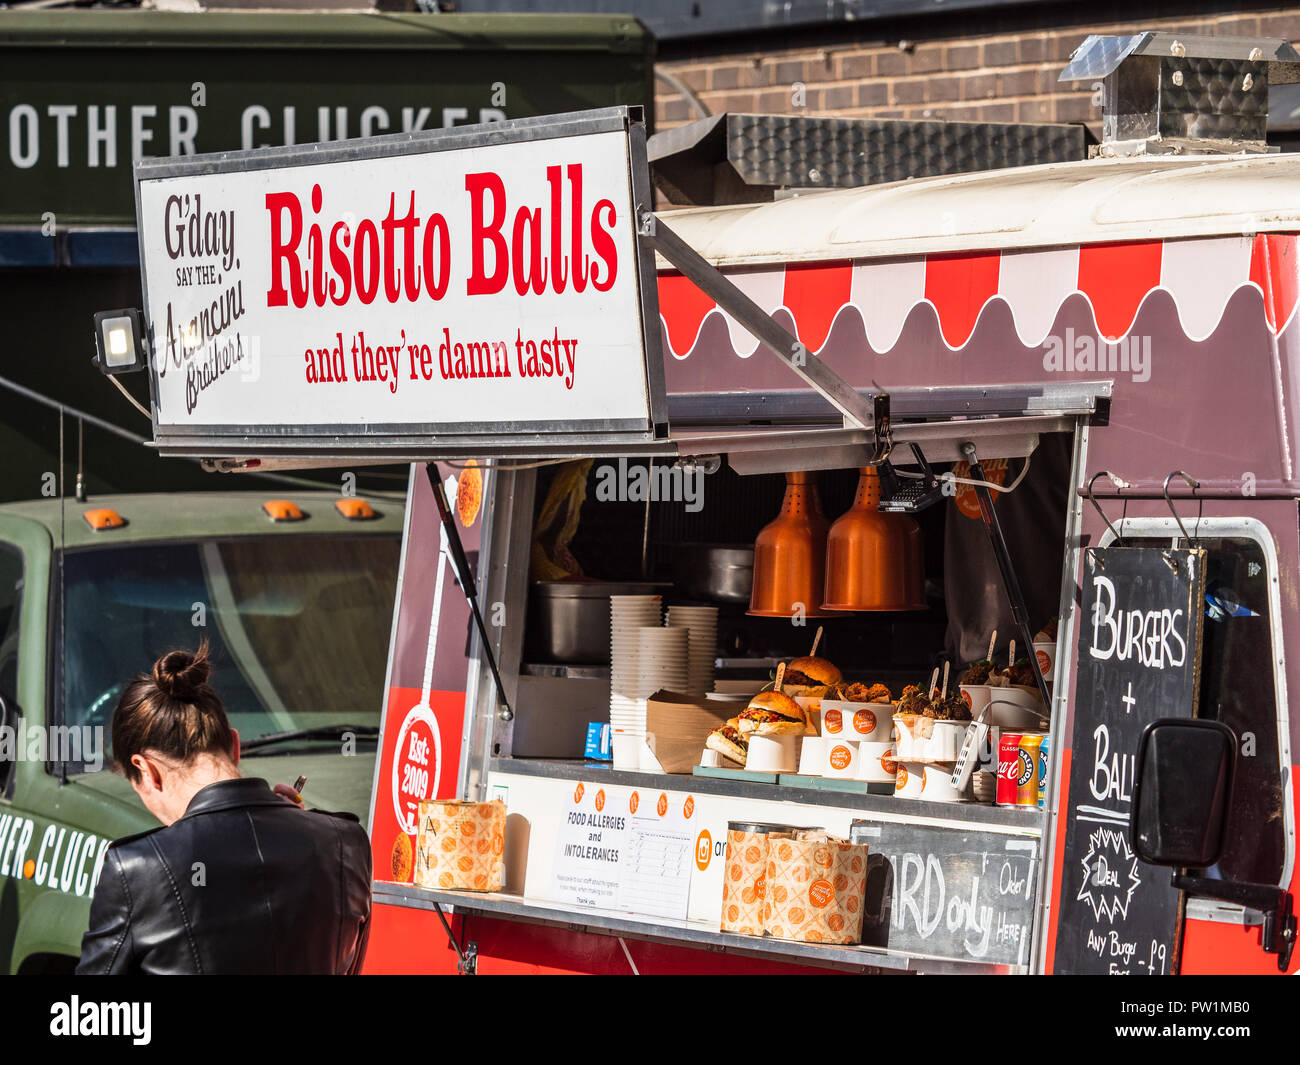 London Street Food - Risotto bolas van en Spitalfields de Londres Foto de stock